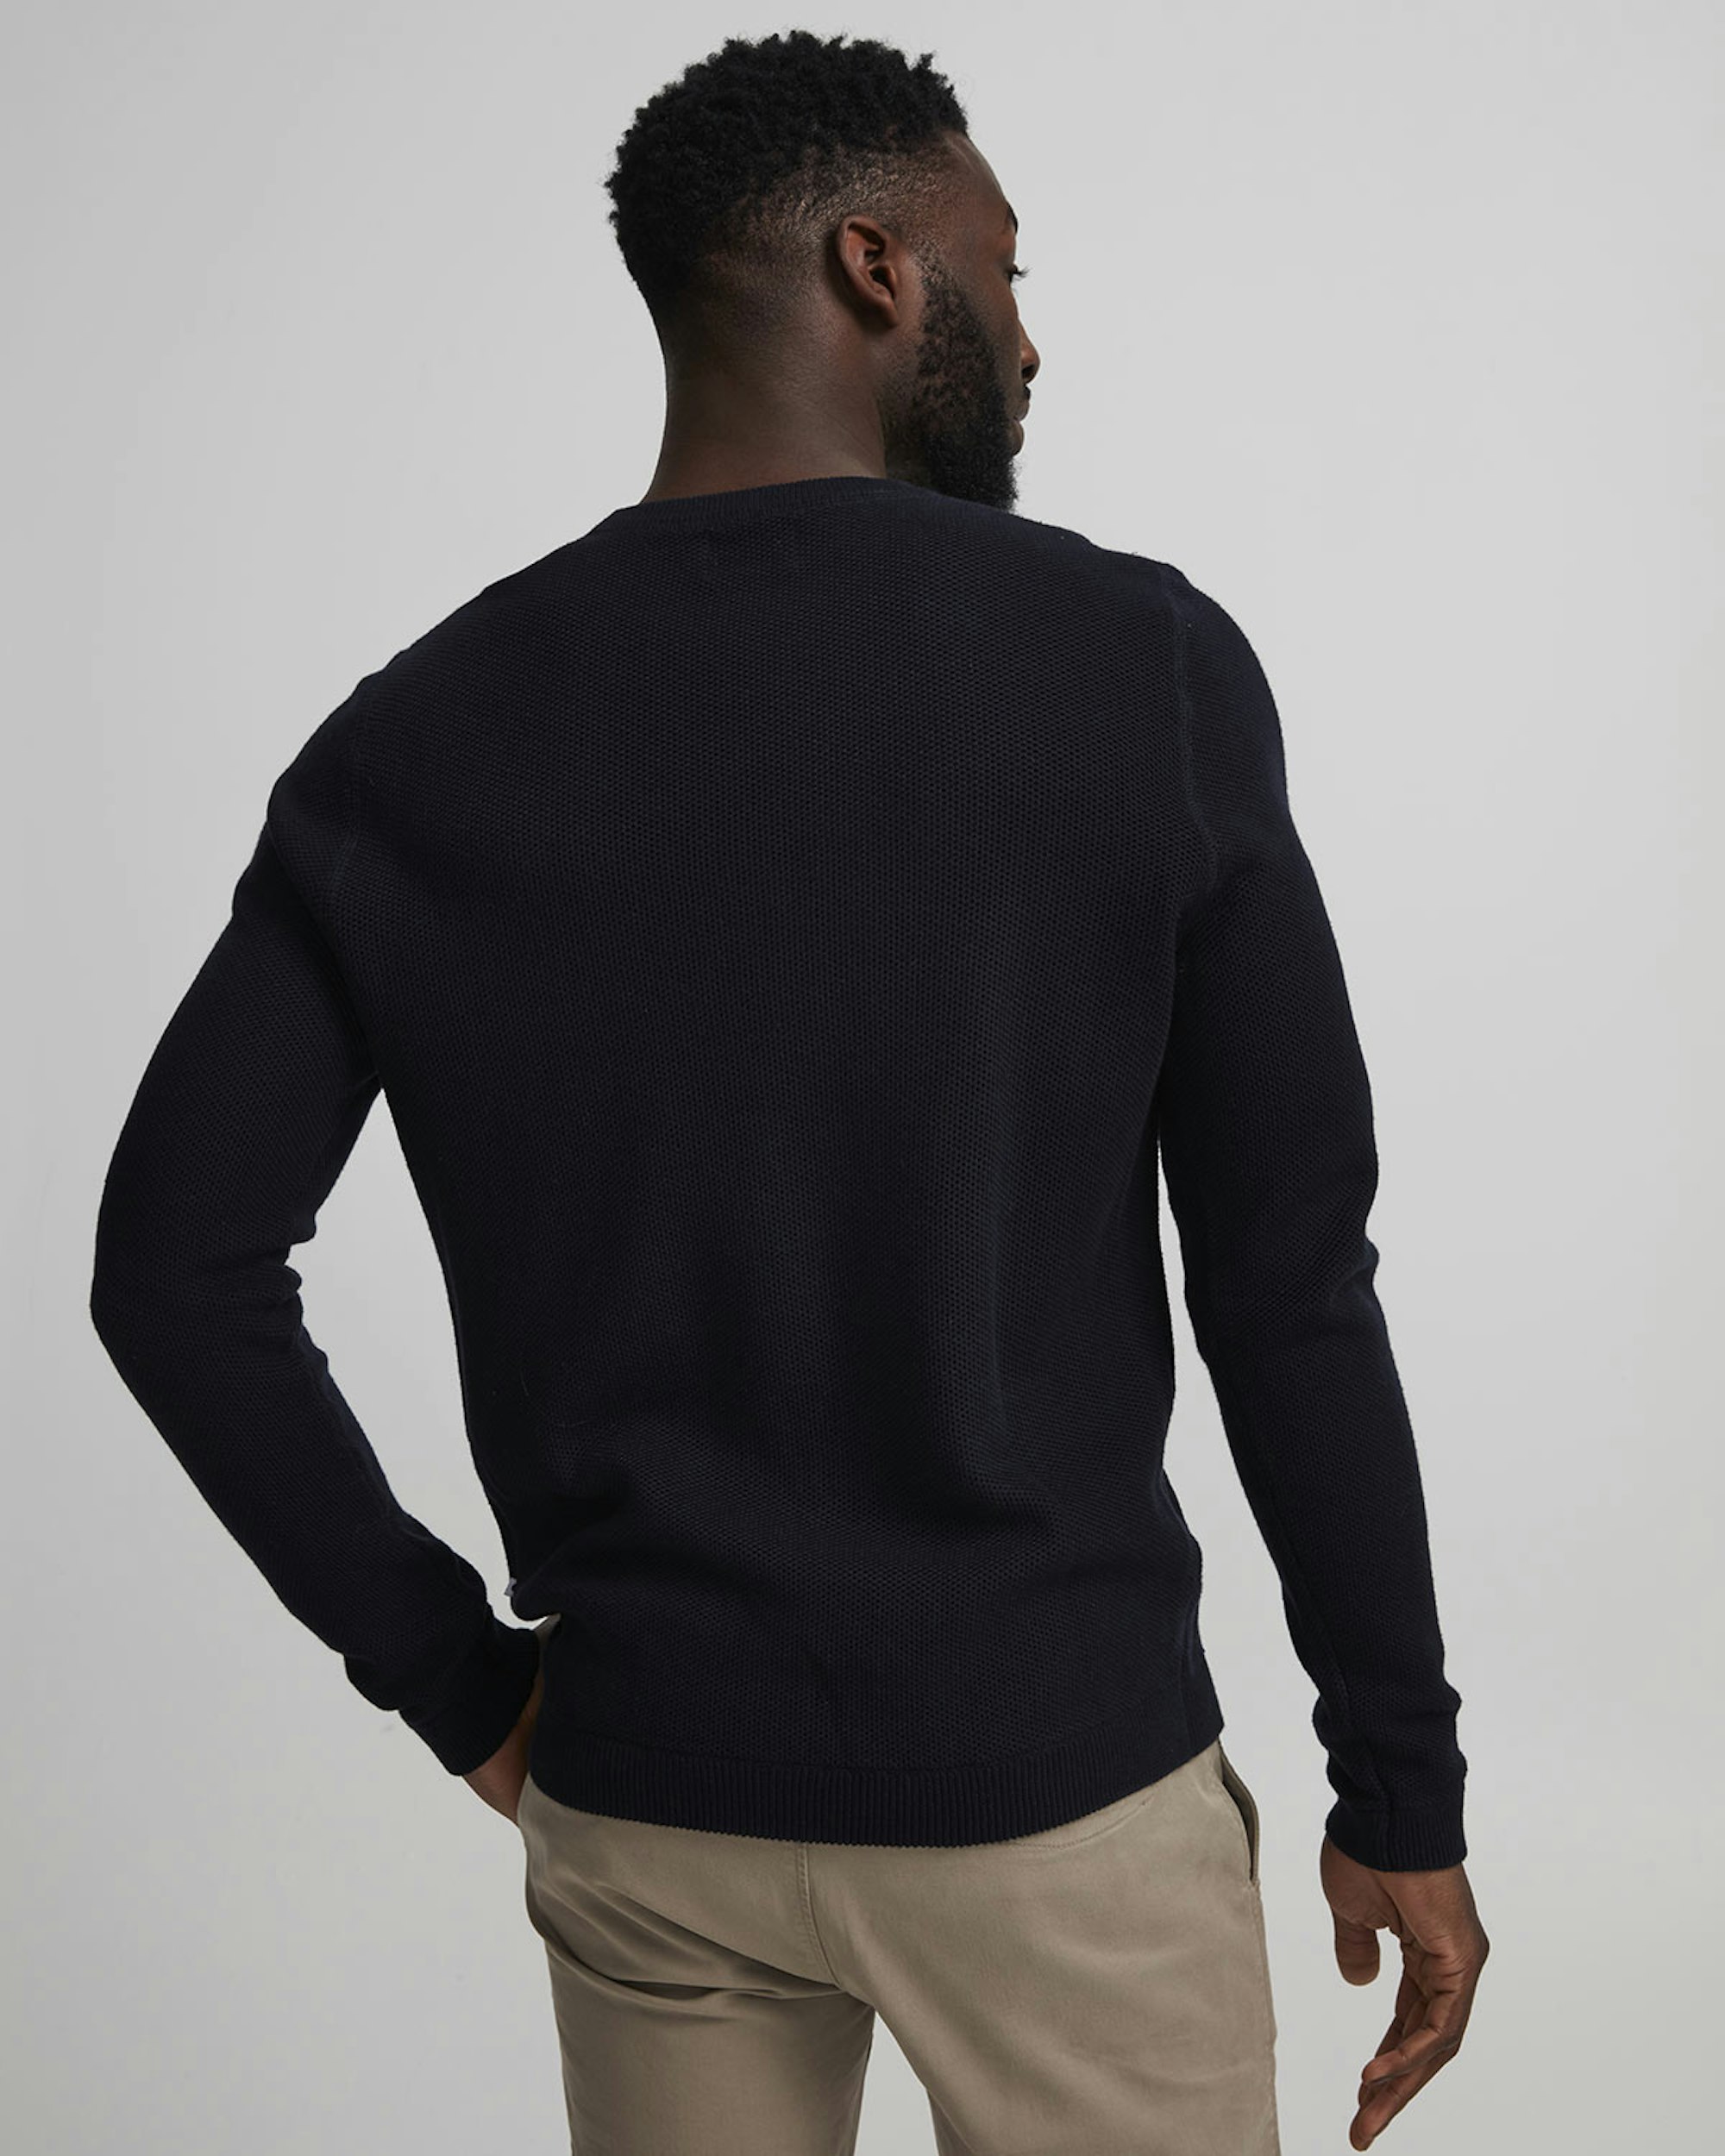 Hubert men's sweater - Black - Buy online at NN07®